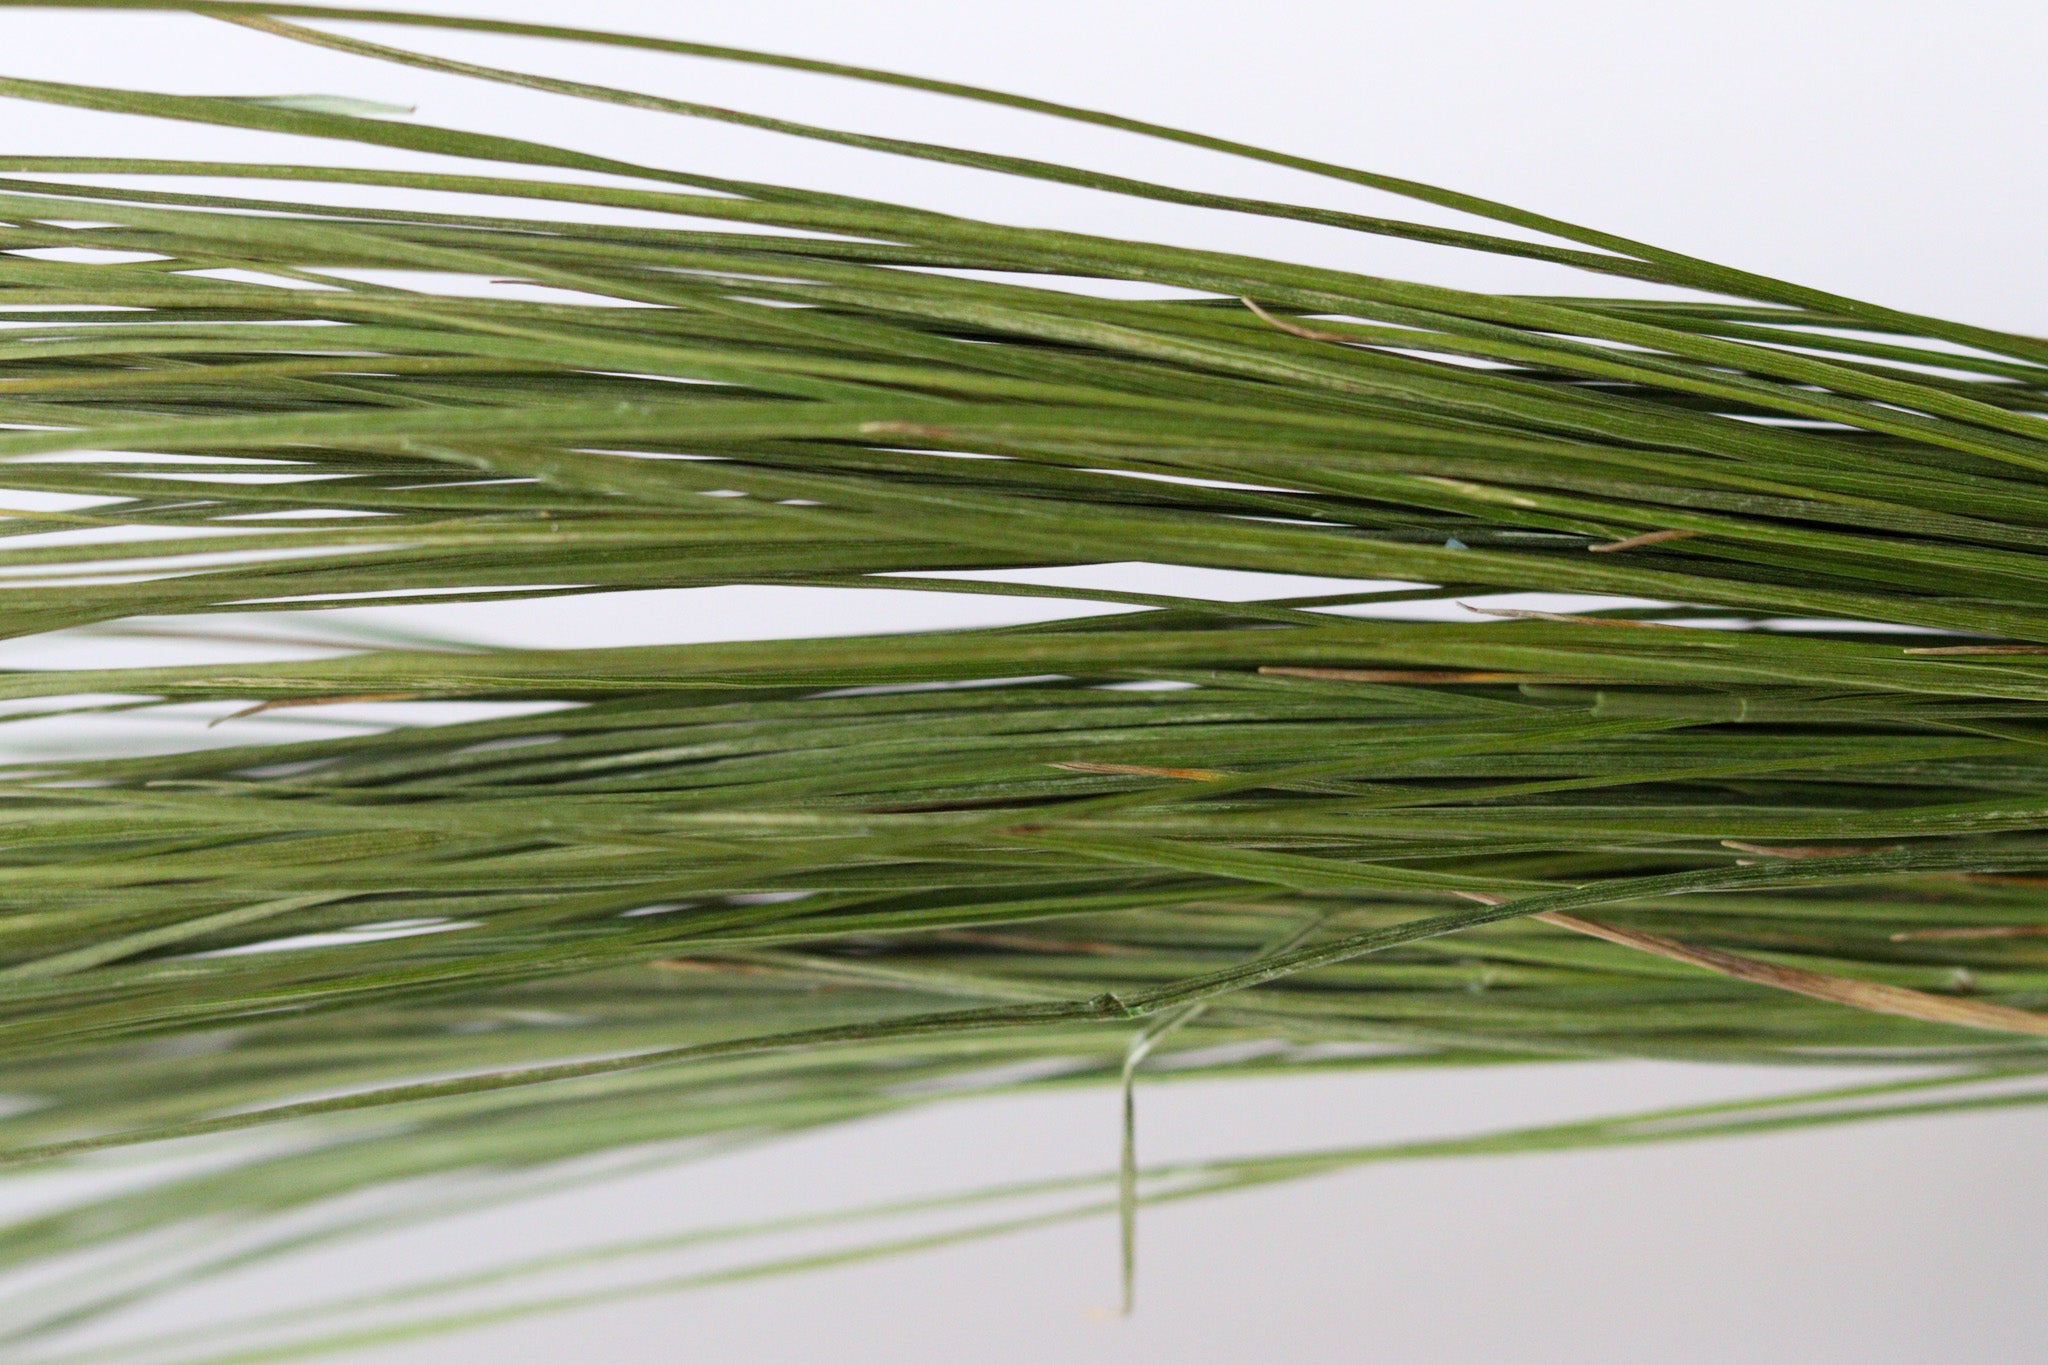 Sweetgrass Uses and Benefits – Ceremoni